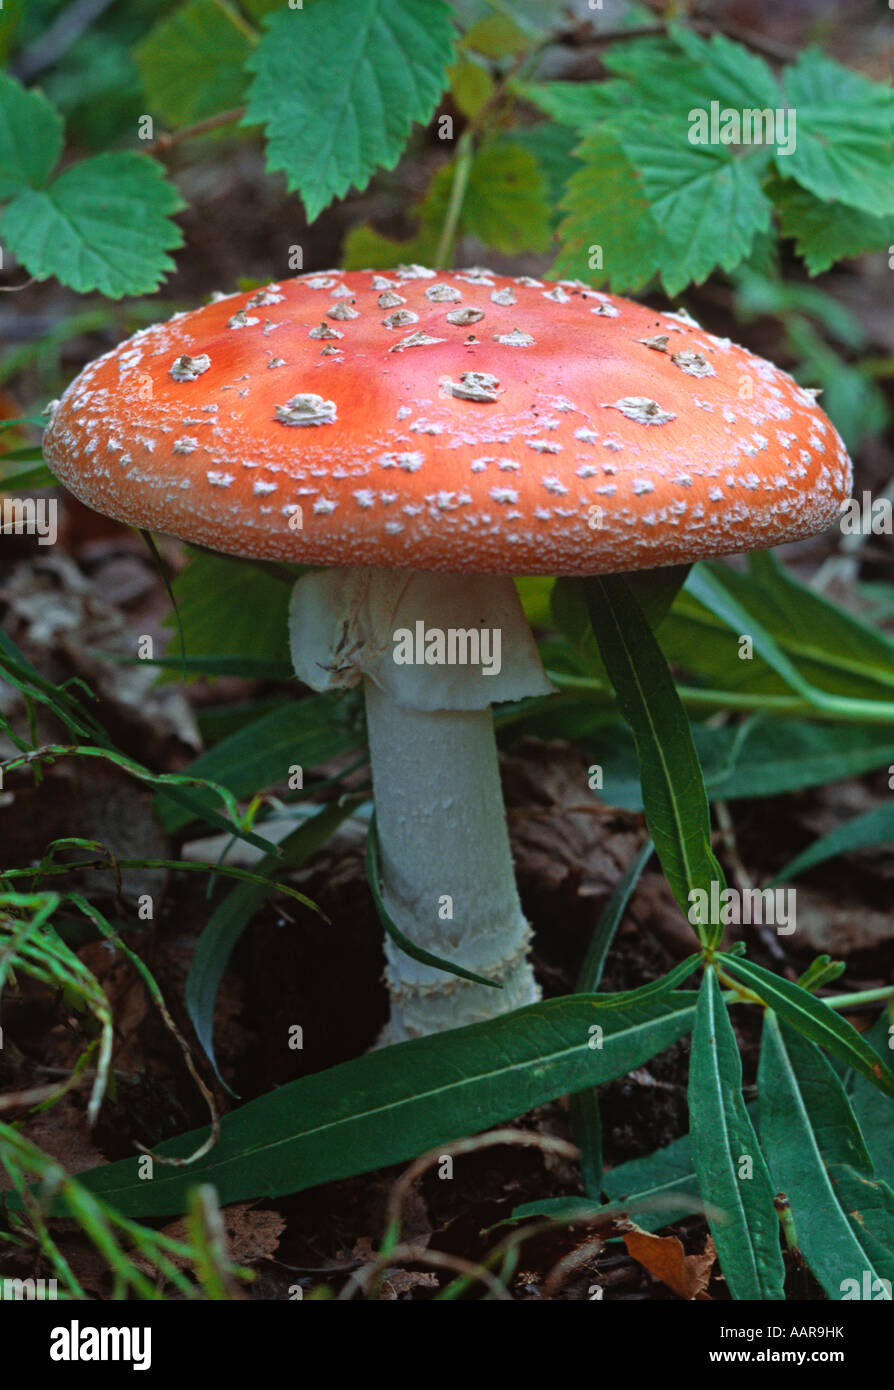 The AMINITA MASCARIA Agalychnis callidryas mushroom grows among the lush rainforest undergrowth KENAI PENINSULA ALASKA Stock Photo